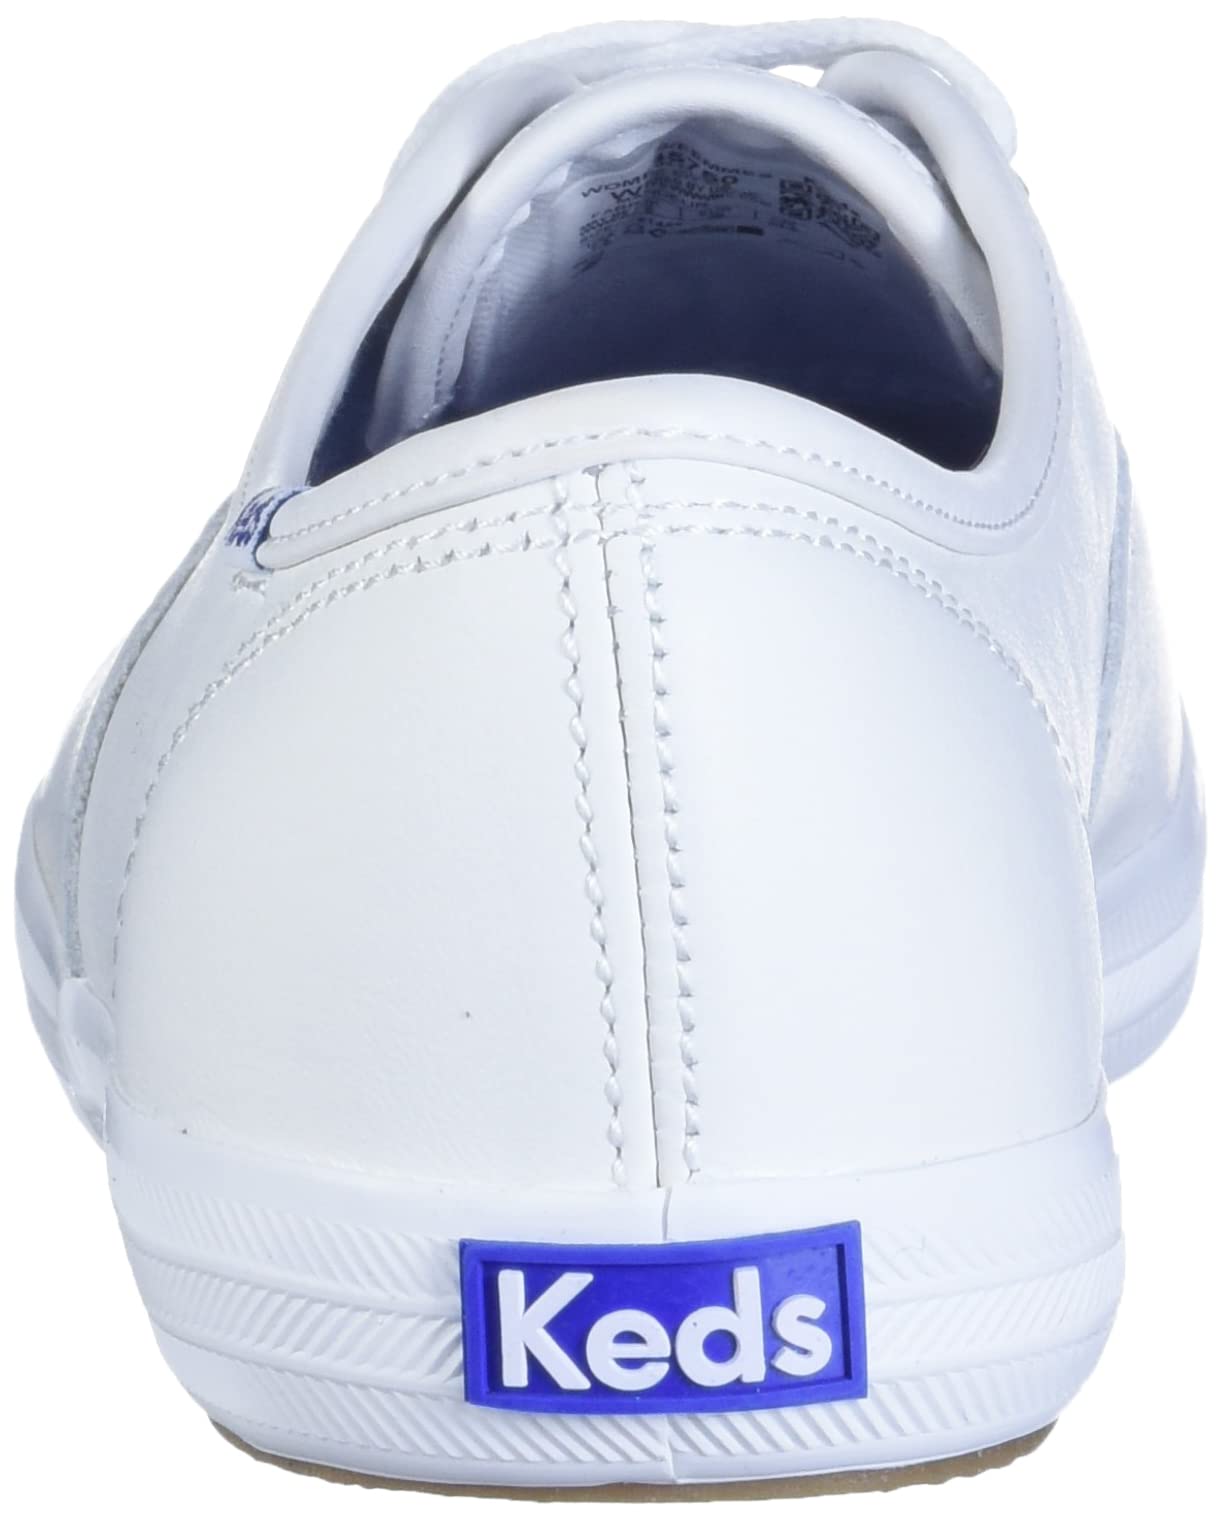 Keds Women's Champion Original Canvas Lace-Up Sneaker, White, 11 XW US